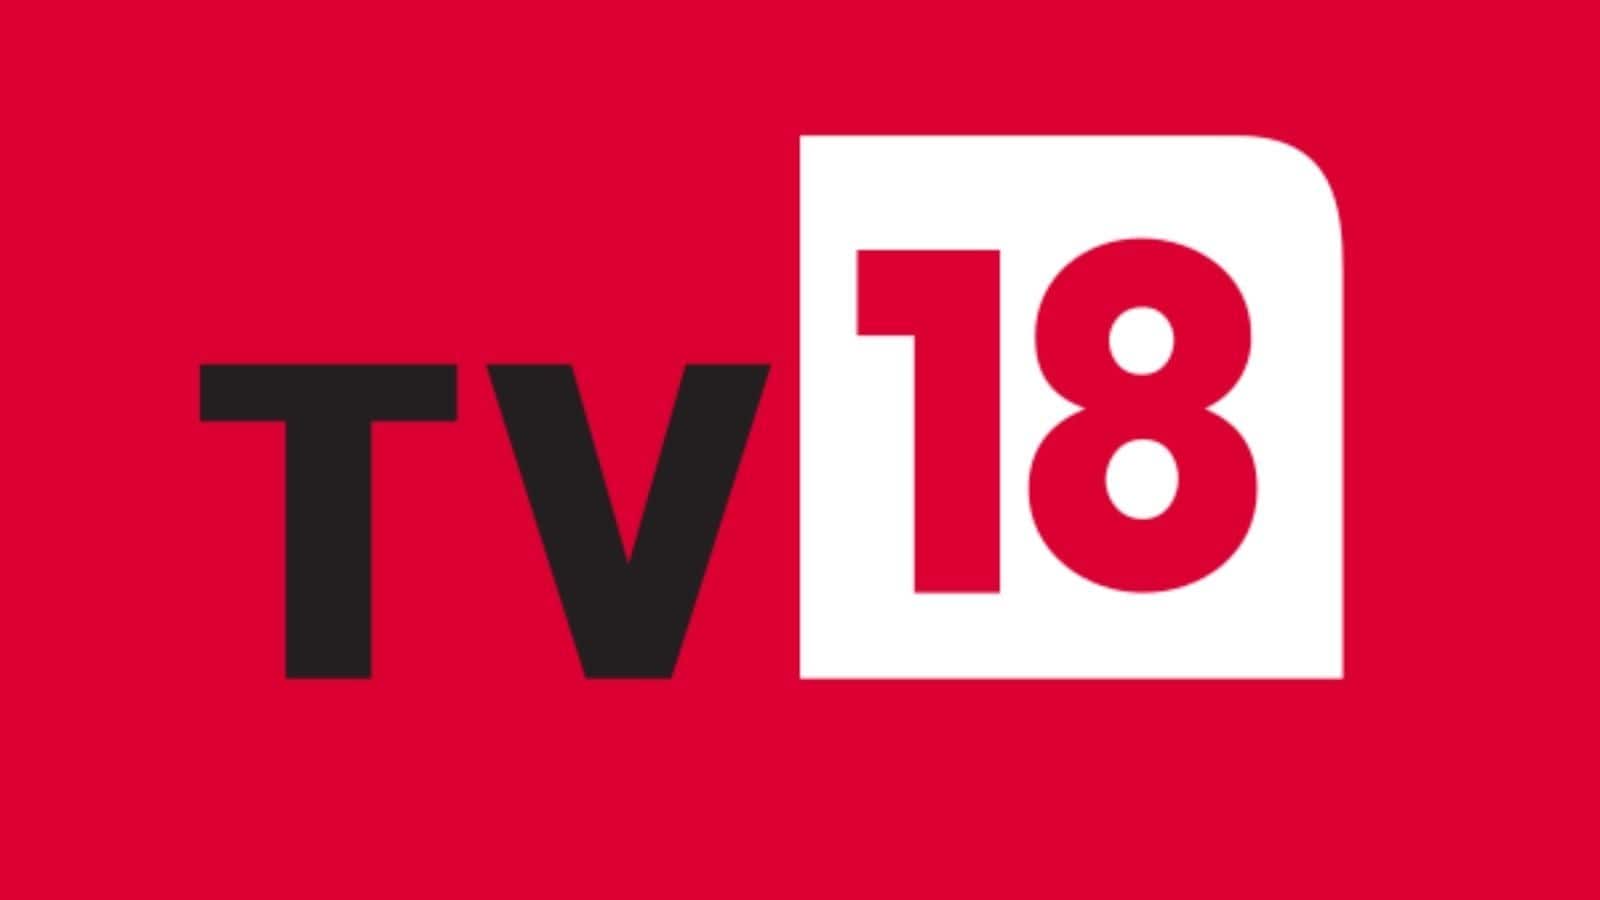 tv18 broadcast q3 results net profit jumps 35 percent sequentially to rs 312 crore mlks - tv18 broadcast का तीसरी तिमाही का शुद्ध लाभ 35% बढ़कर हुआ 312 करोड़ रुपये, ऑपरेटिंग रेवेन्‍यू में 20 ...